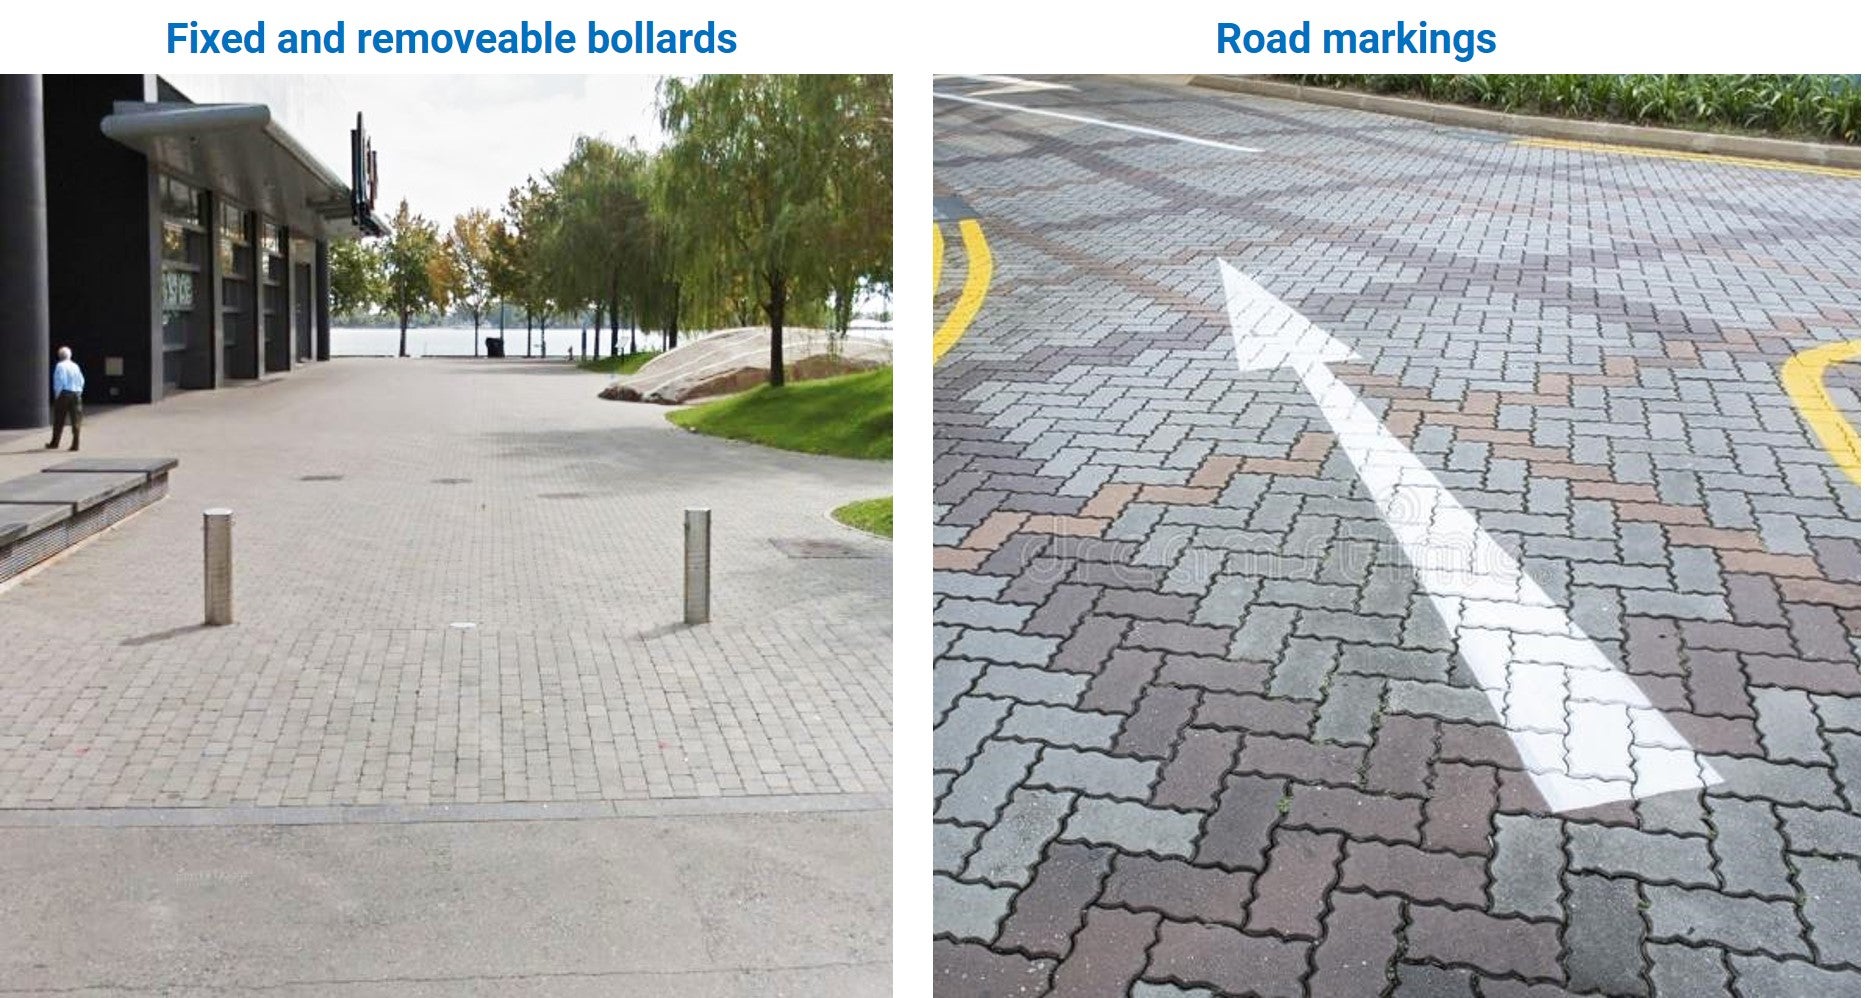 Bollards and road markings